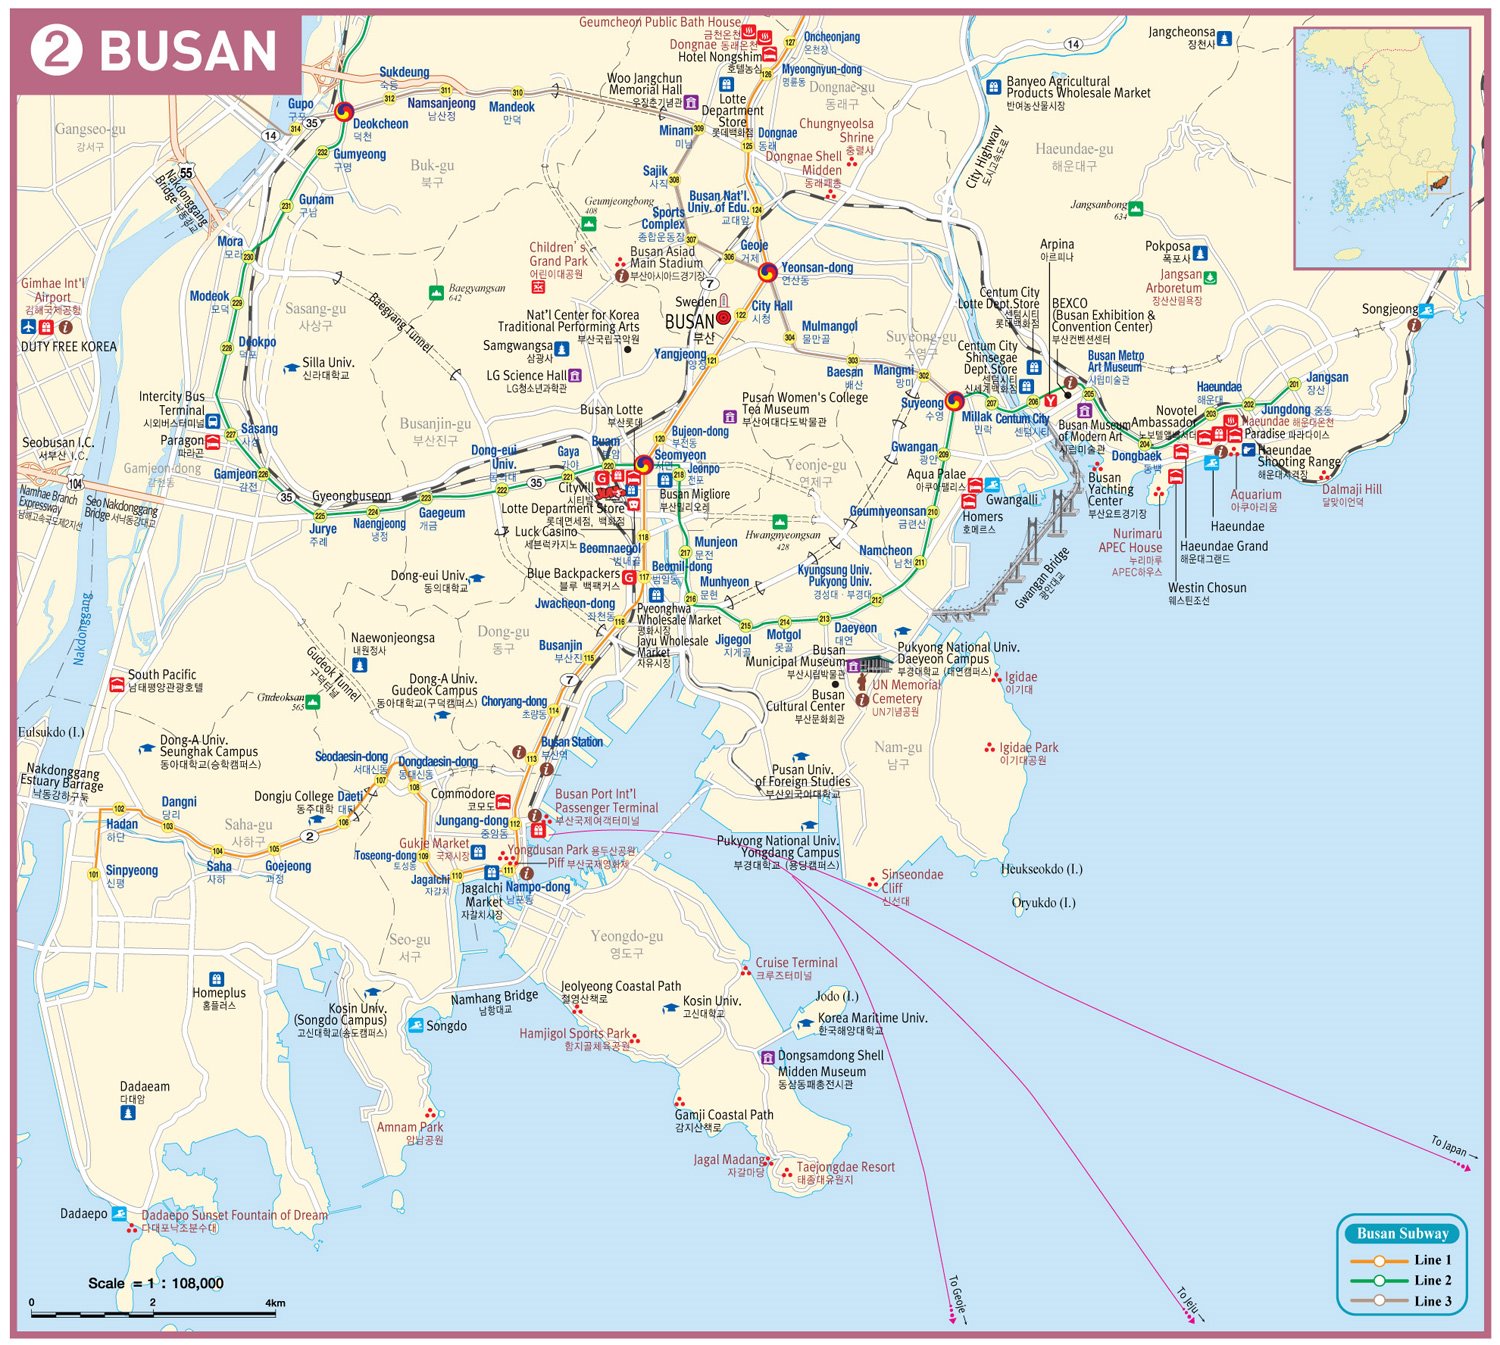 Korea busan map of south South Korea